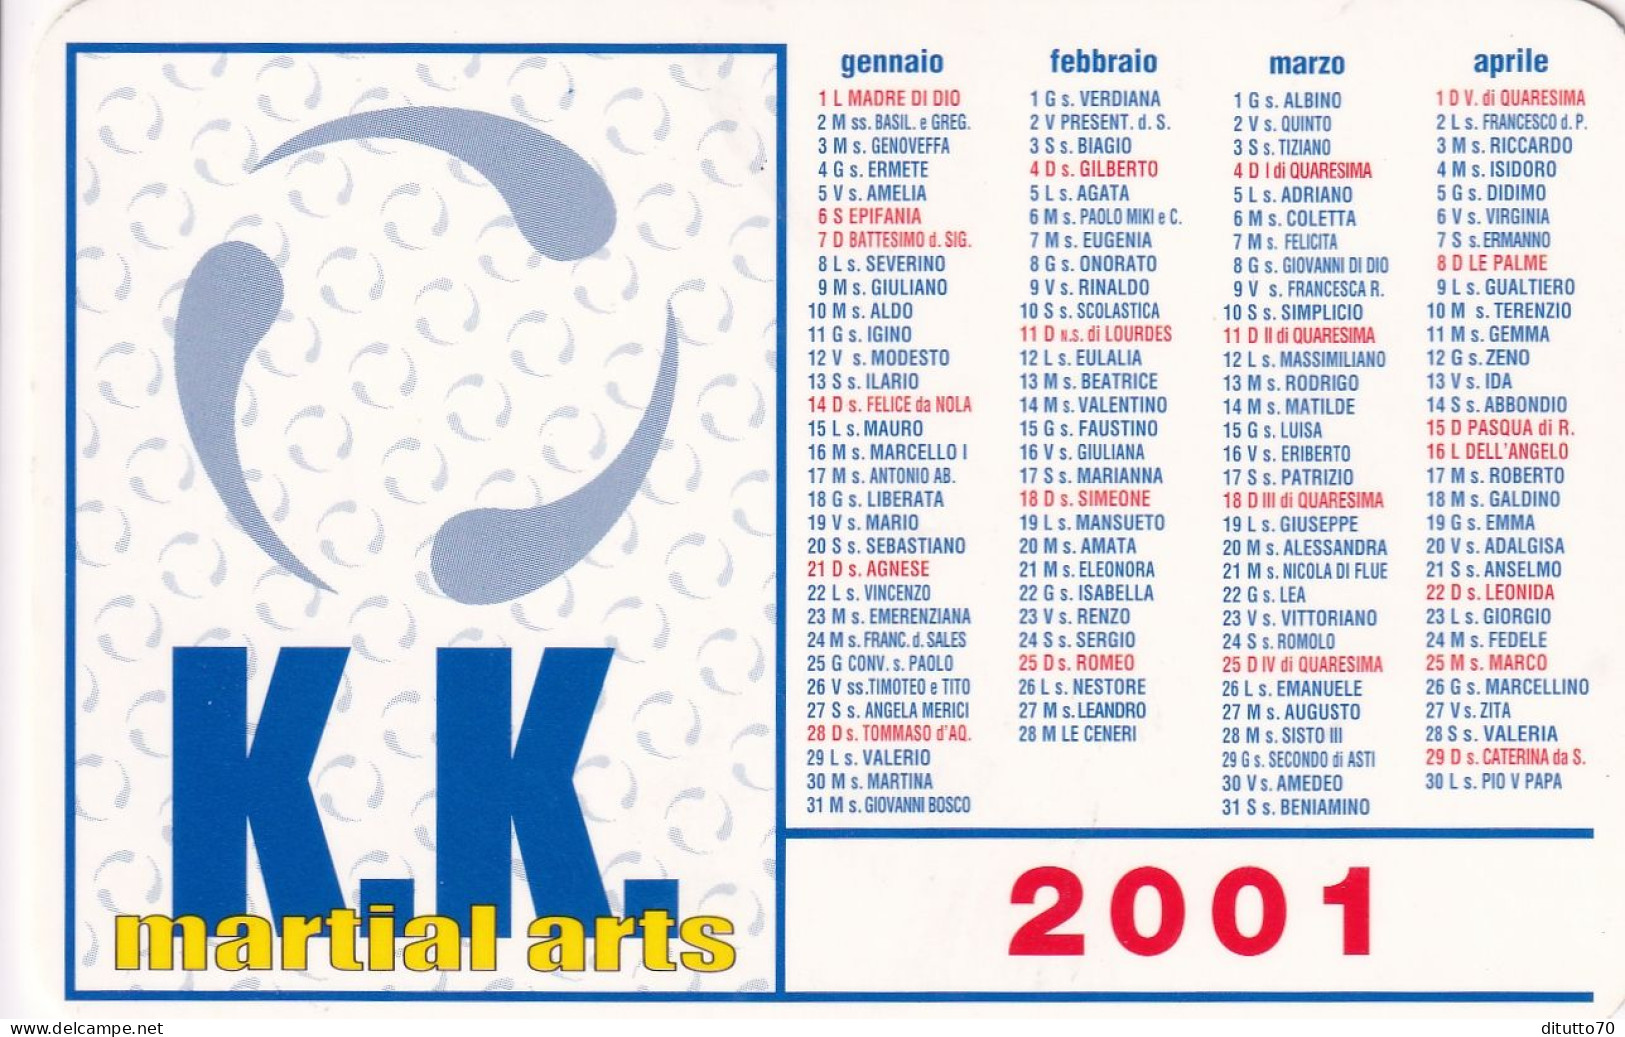 Calendarietto - K.k. - Martial Arts - Anno 2001 - Kleinformat : 2001-...